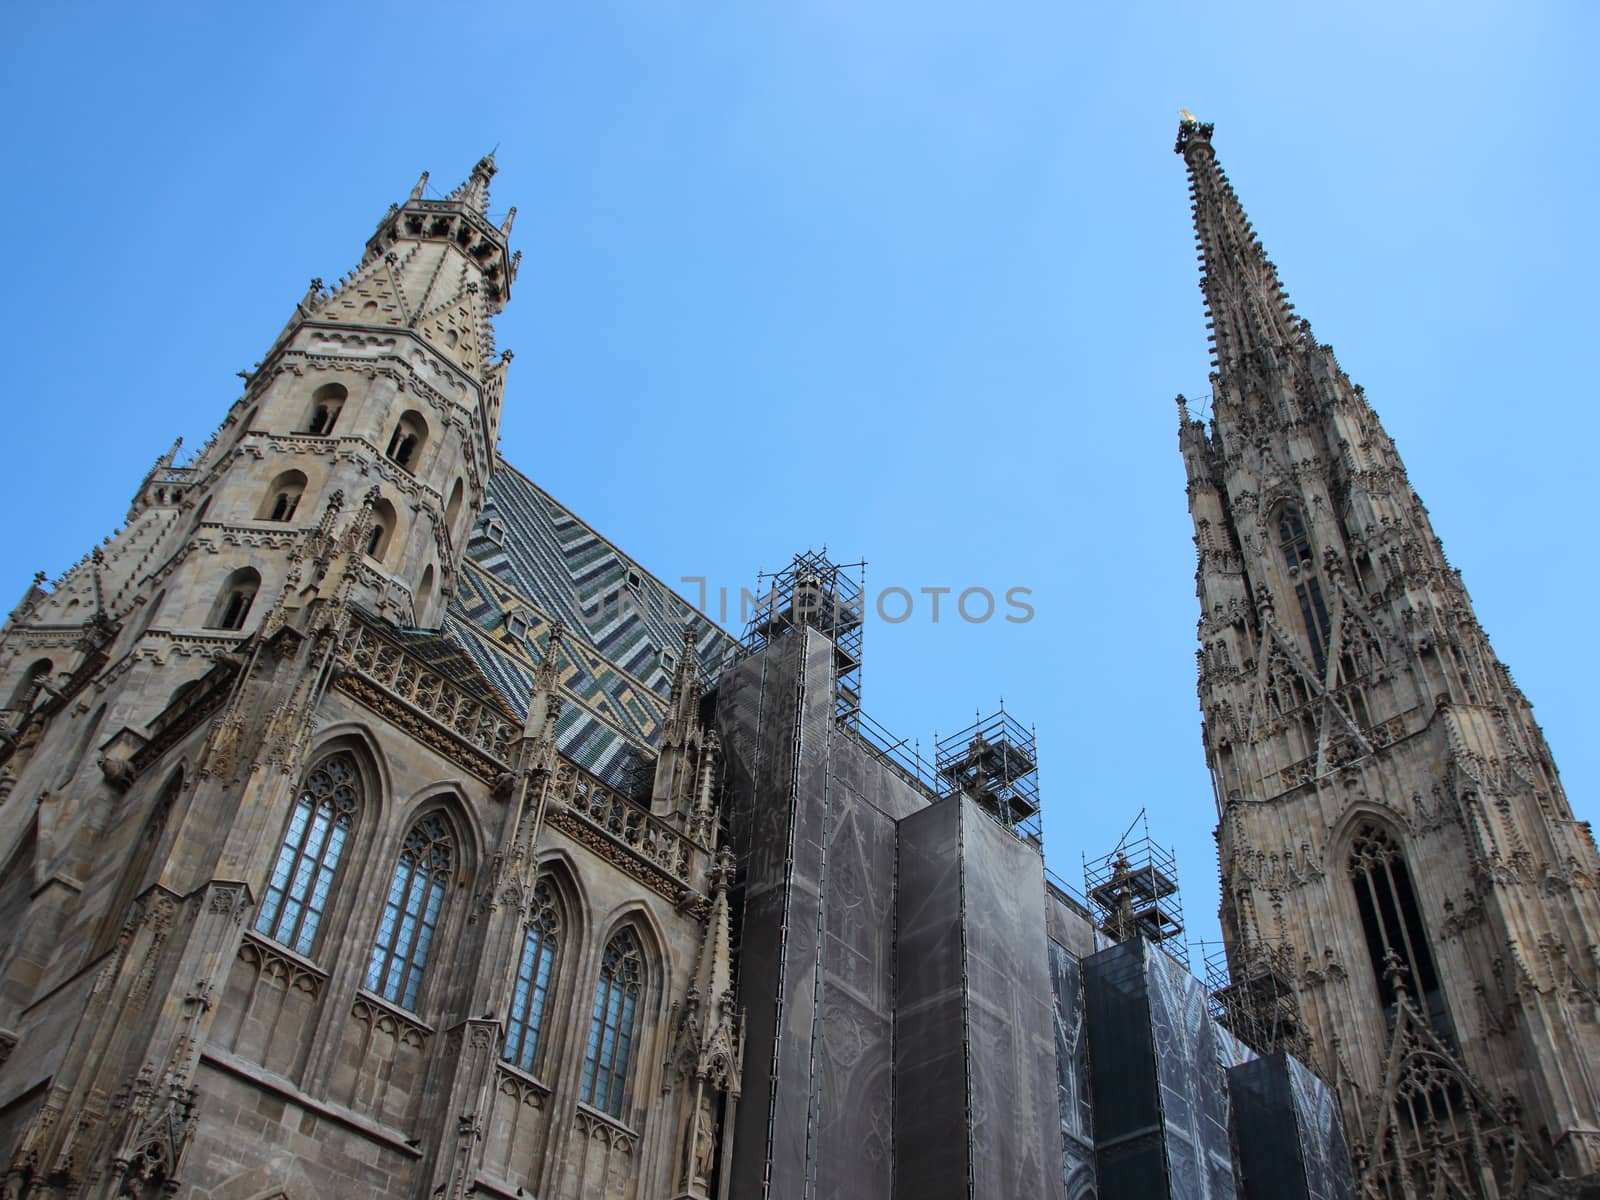 Stephansdom Church in Vienna Austria under repair with Blue Sky